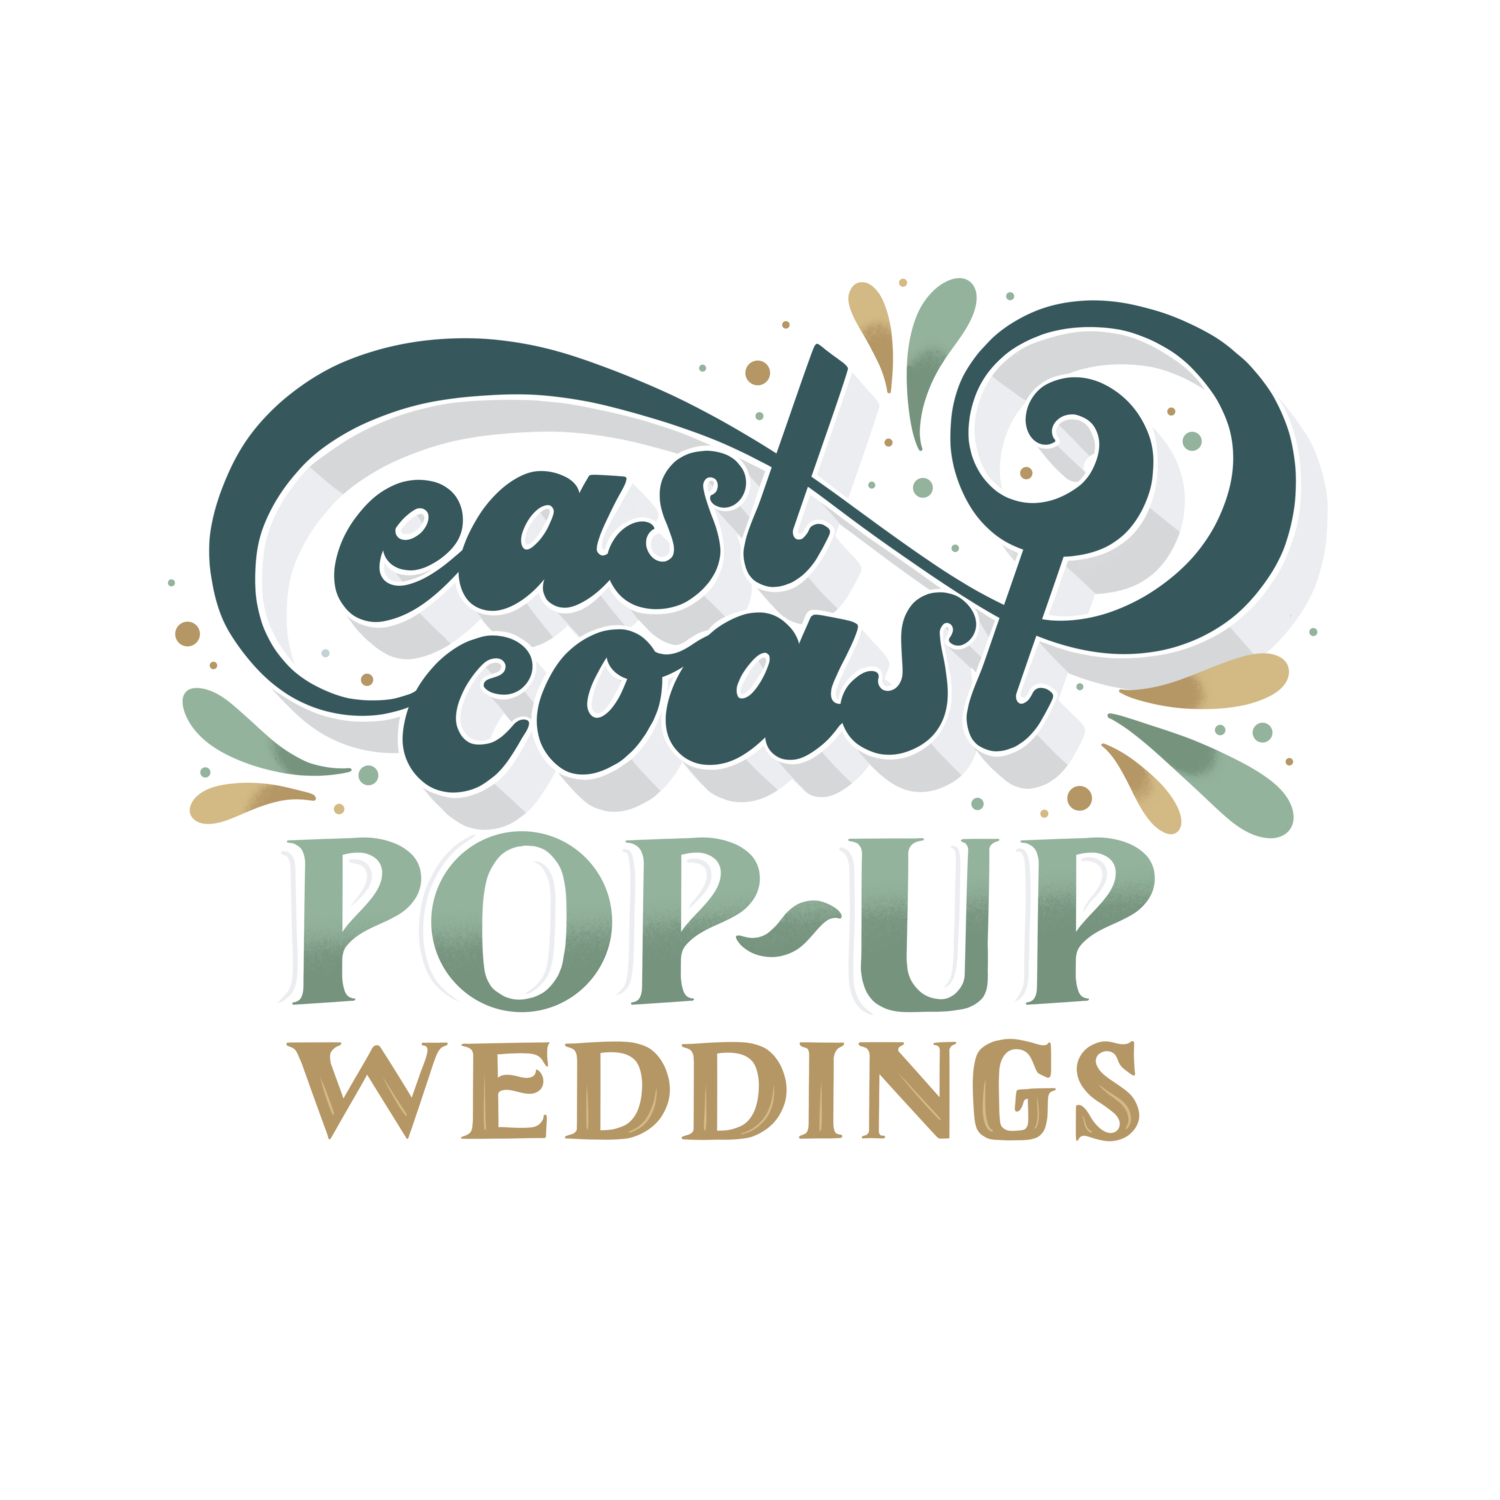 East Coast Pop-Up Weddings